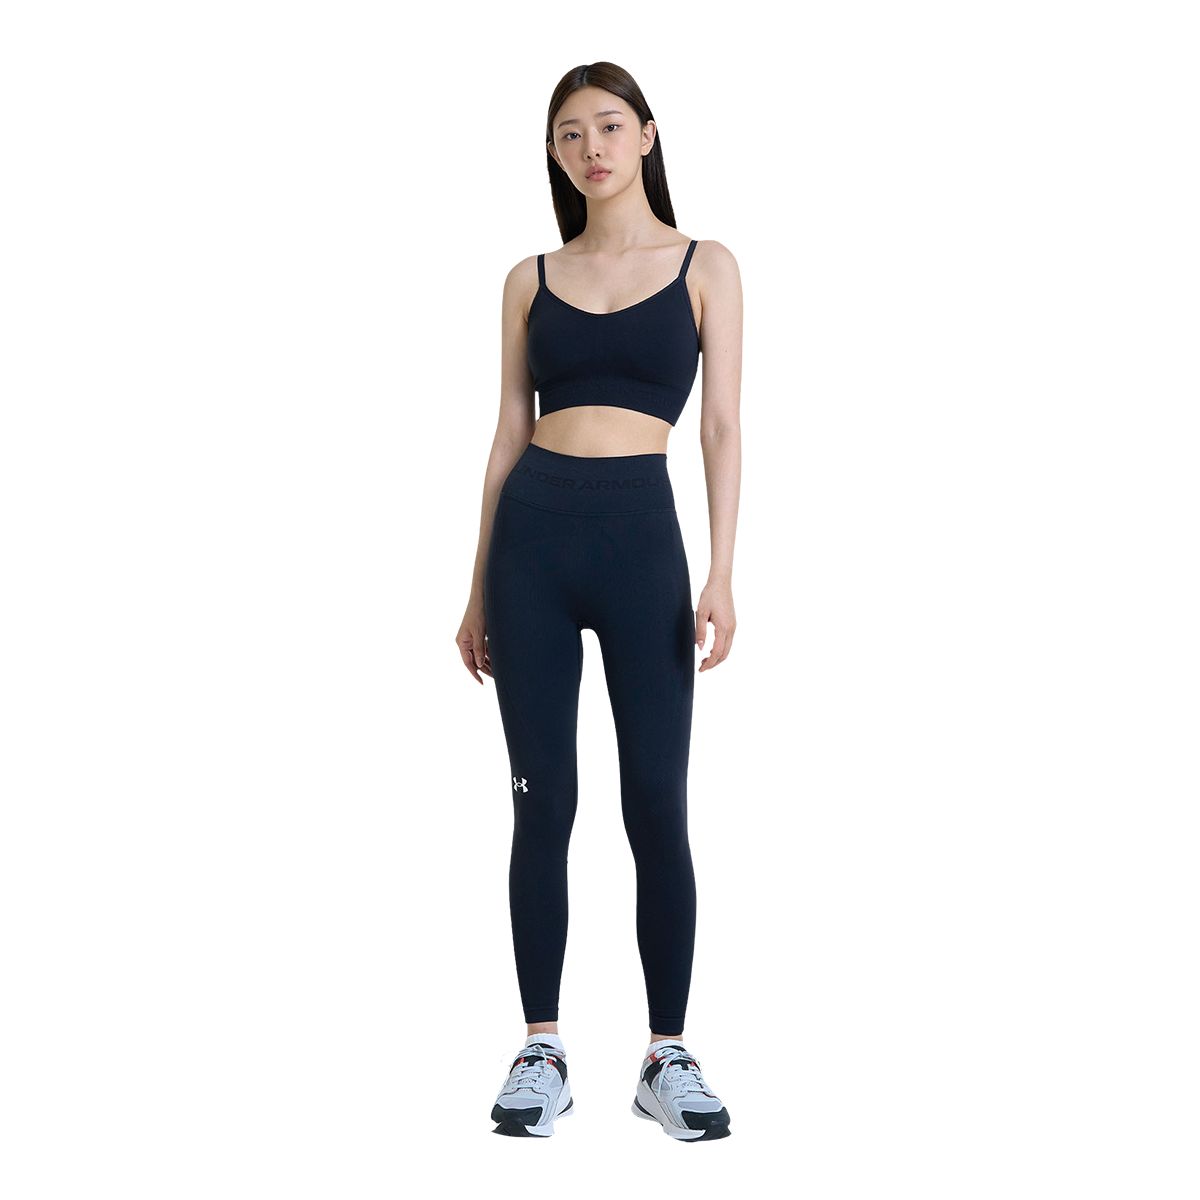 Under Armour Pants Womens Medium Black Legging Workout Athletic